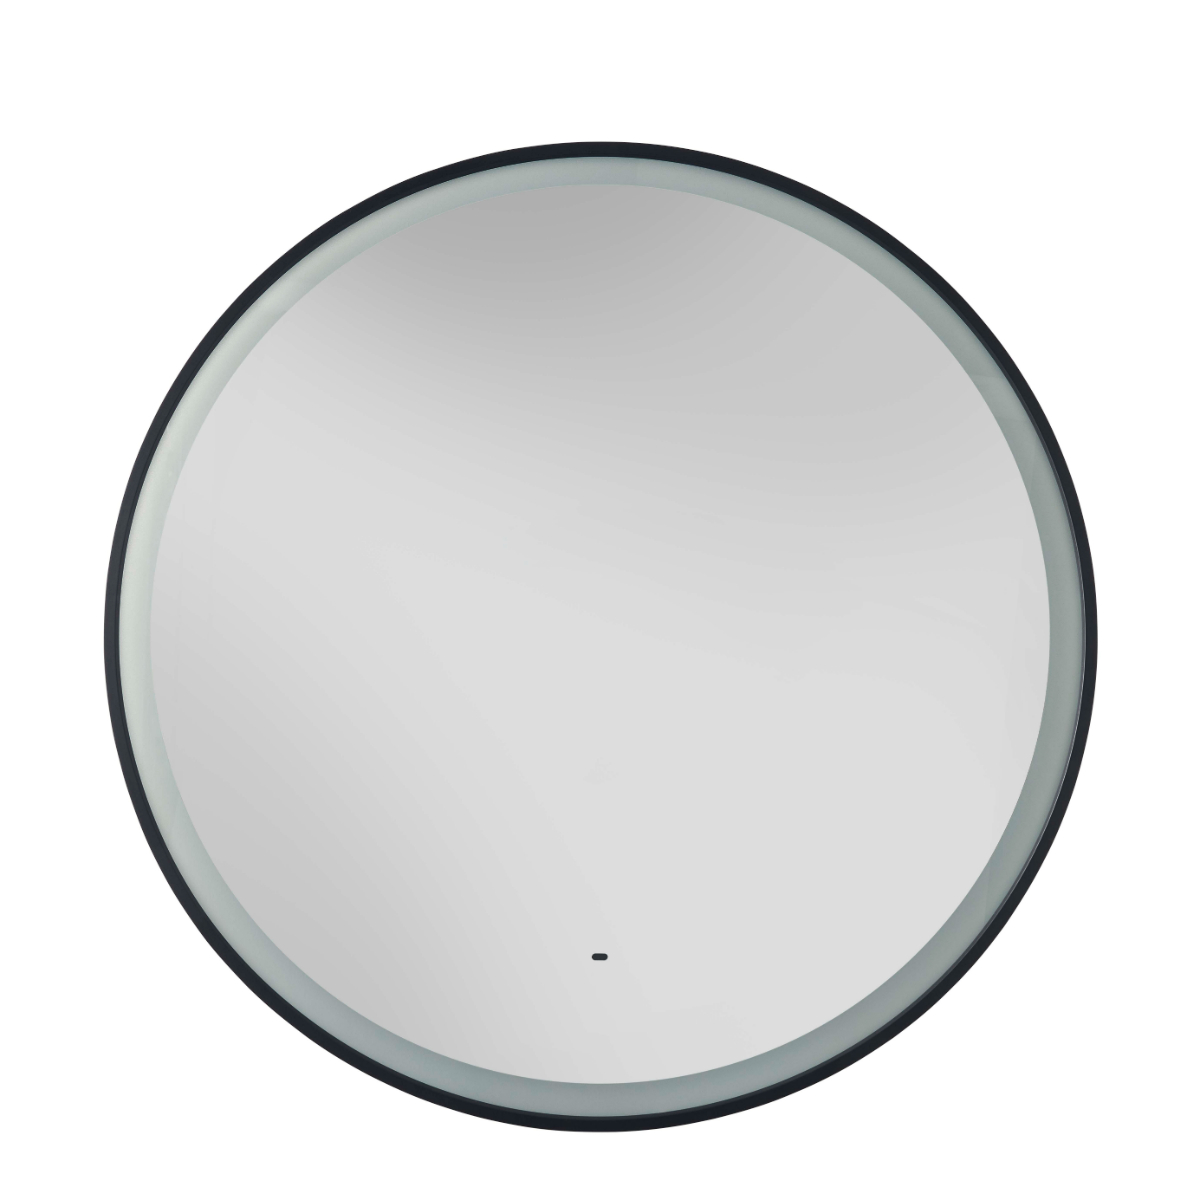 Newick Illuminated Circular Mirror 800mm Black